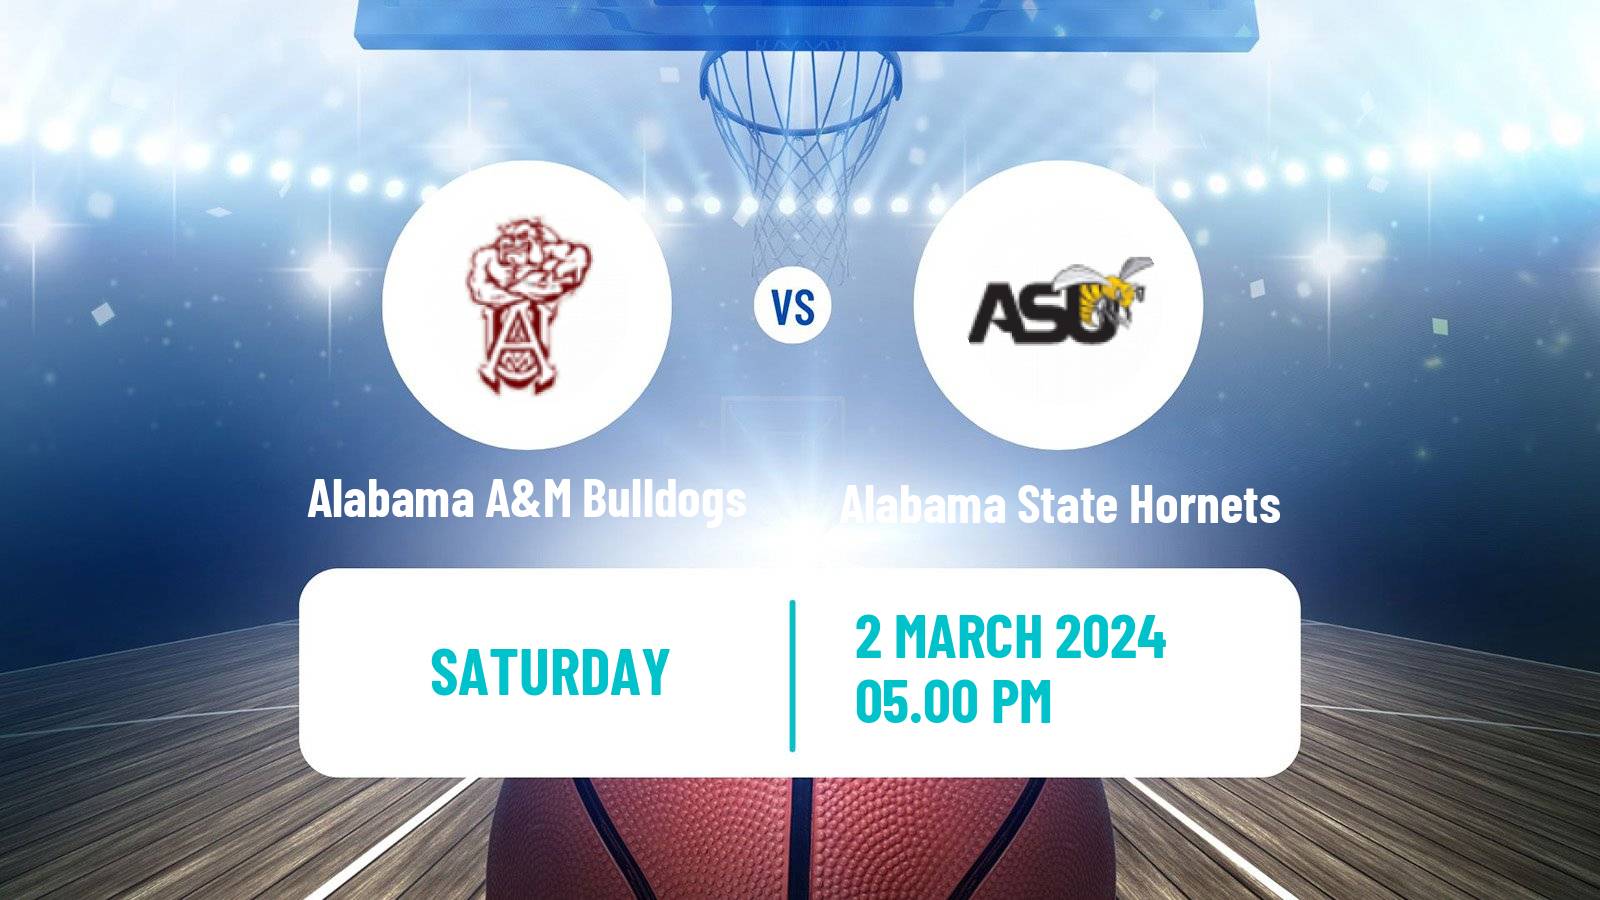 Basketball NCAA College Basketball Alabama A&M Bulldogs - Alabama State Hornets